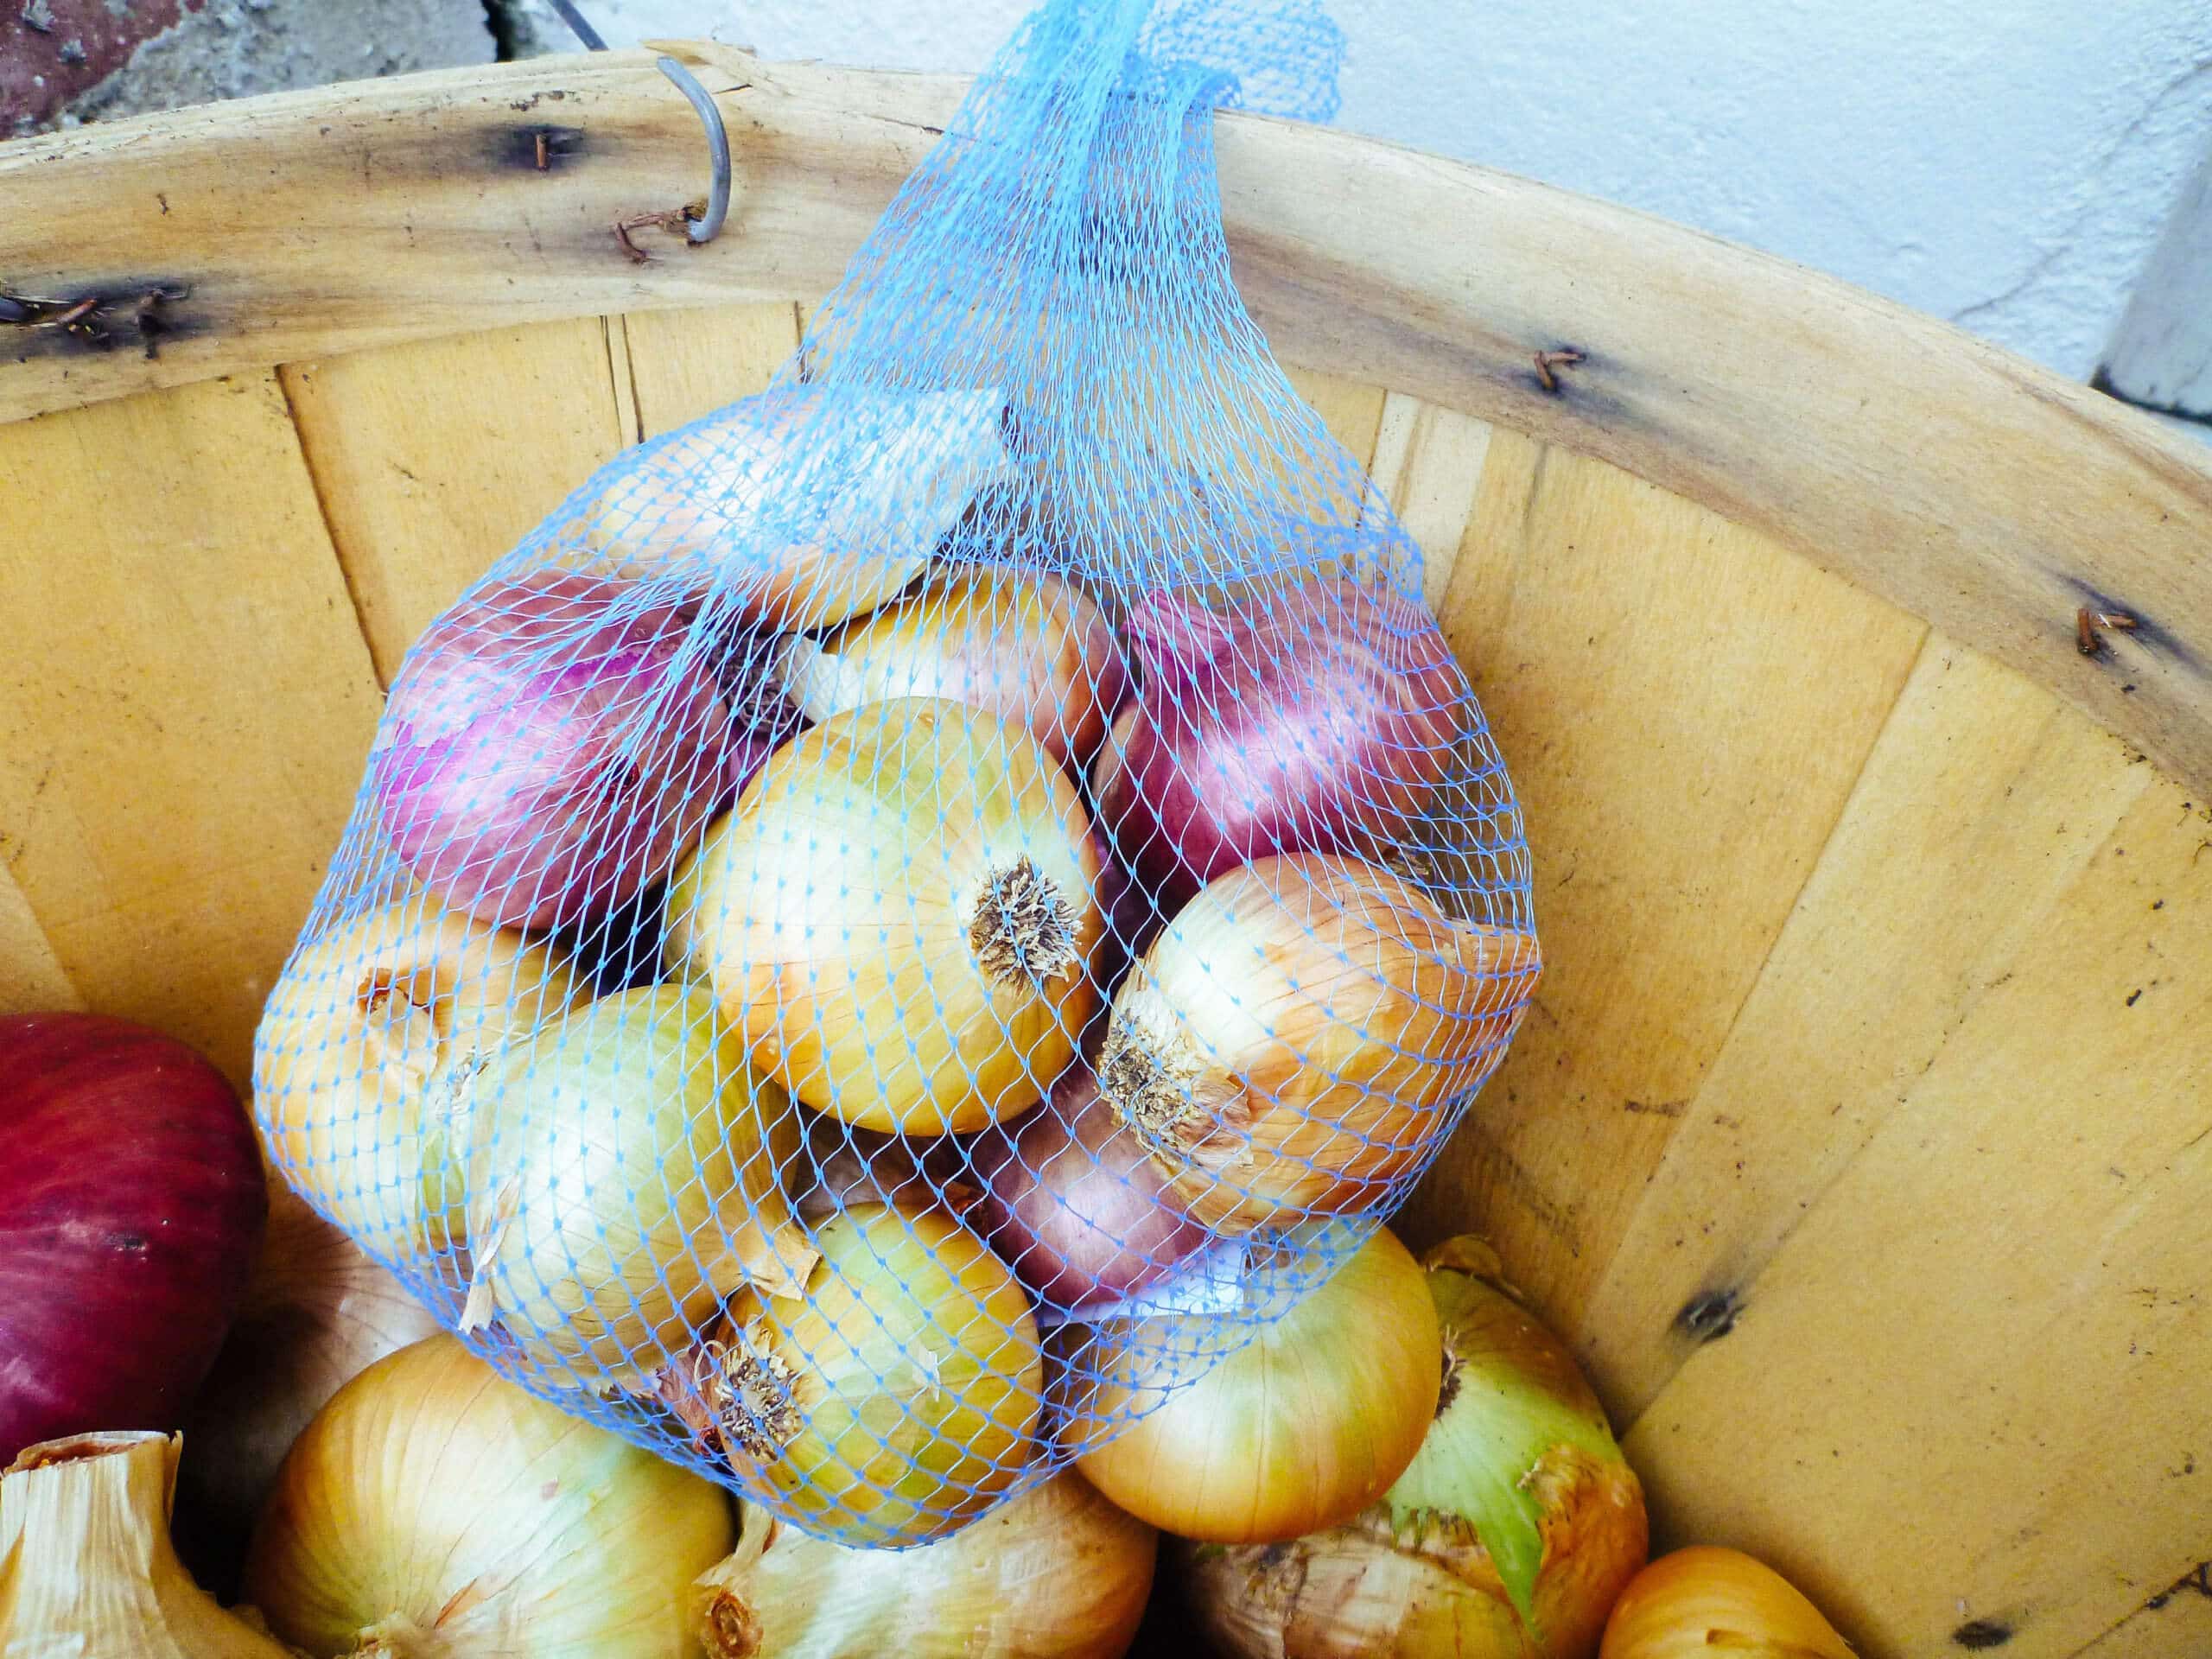 Red and yellow globe onions in mesh nylon bag